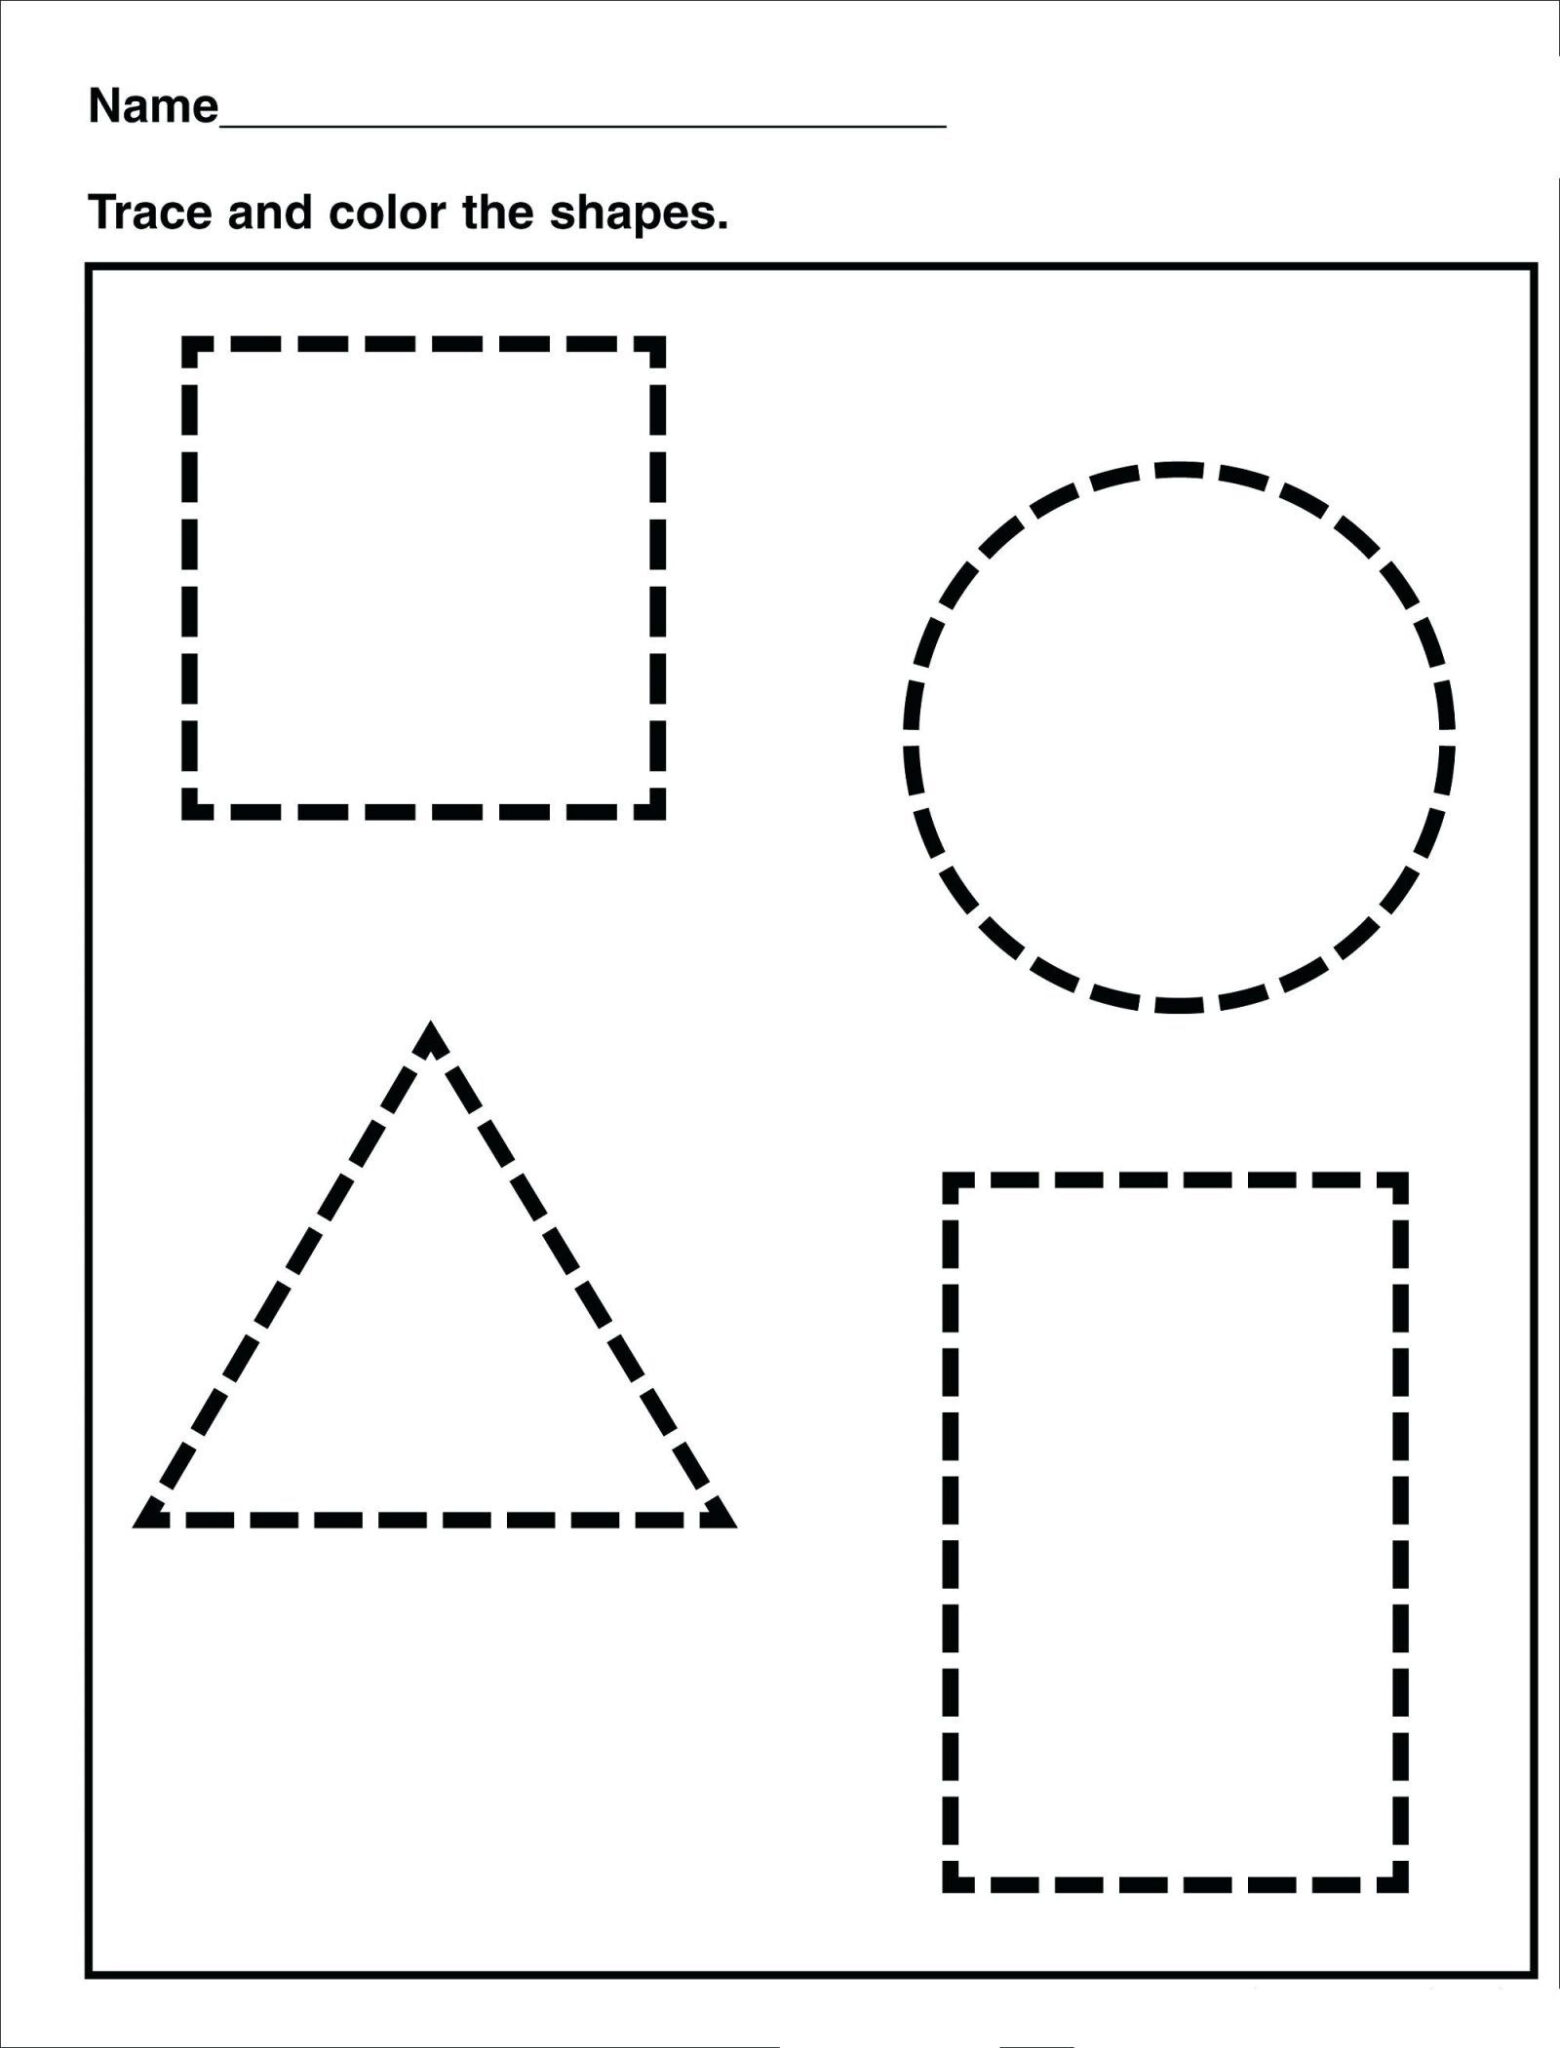 tracing-shape-tracing-preschool-free-printable-worksheets-shape